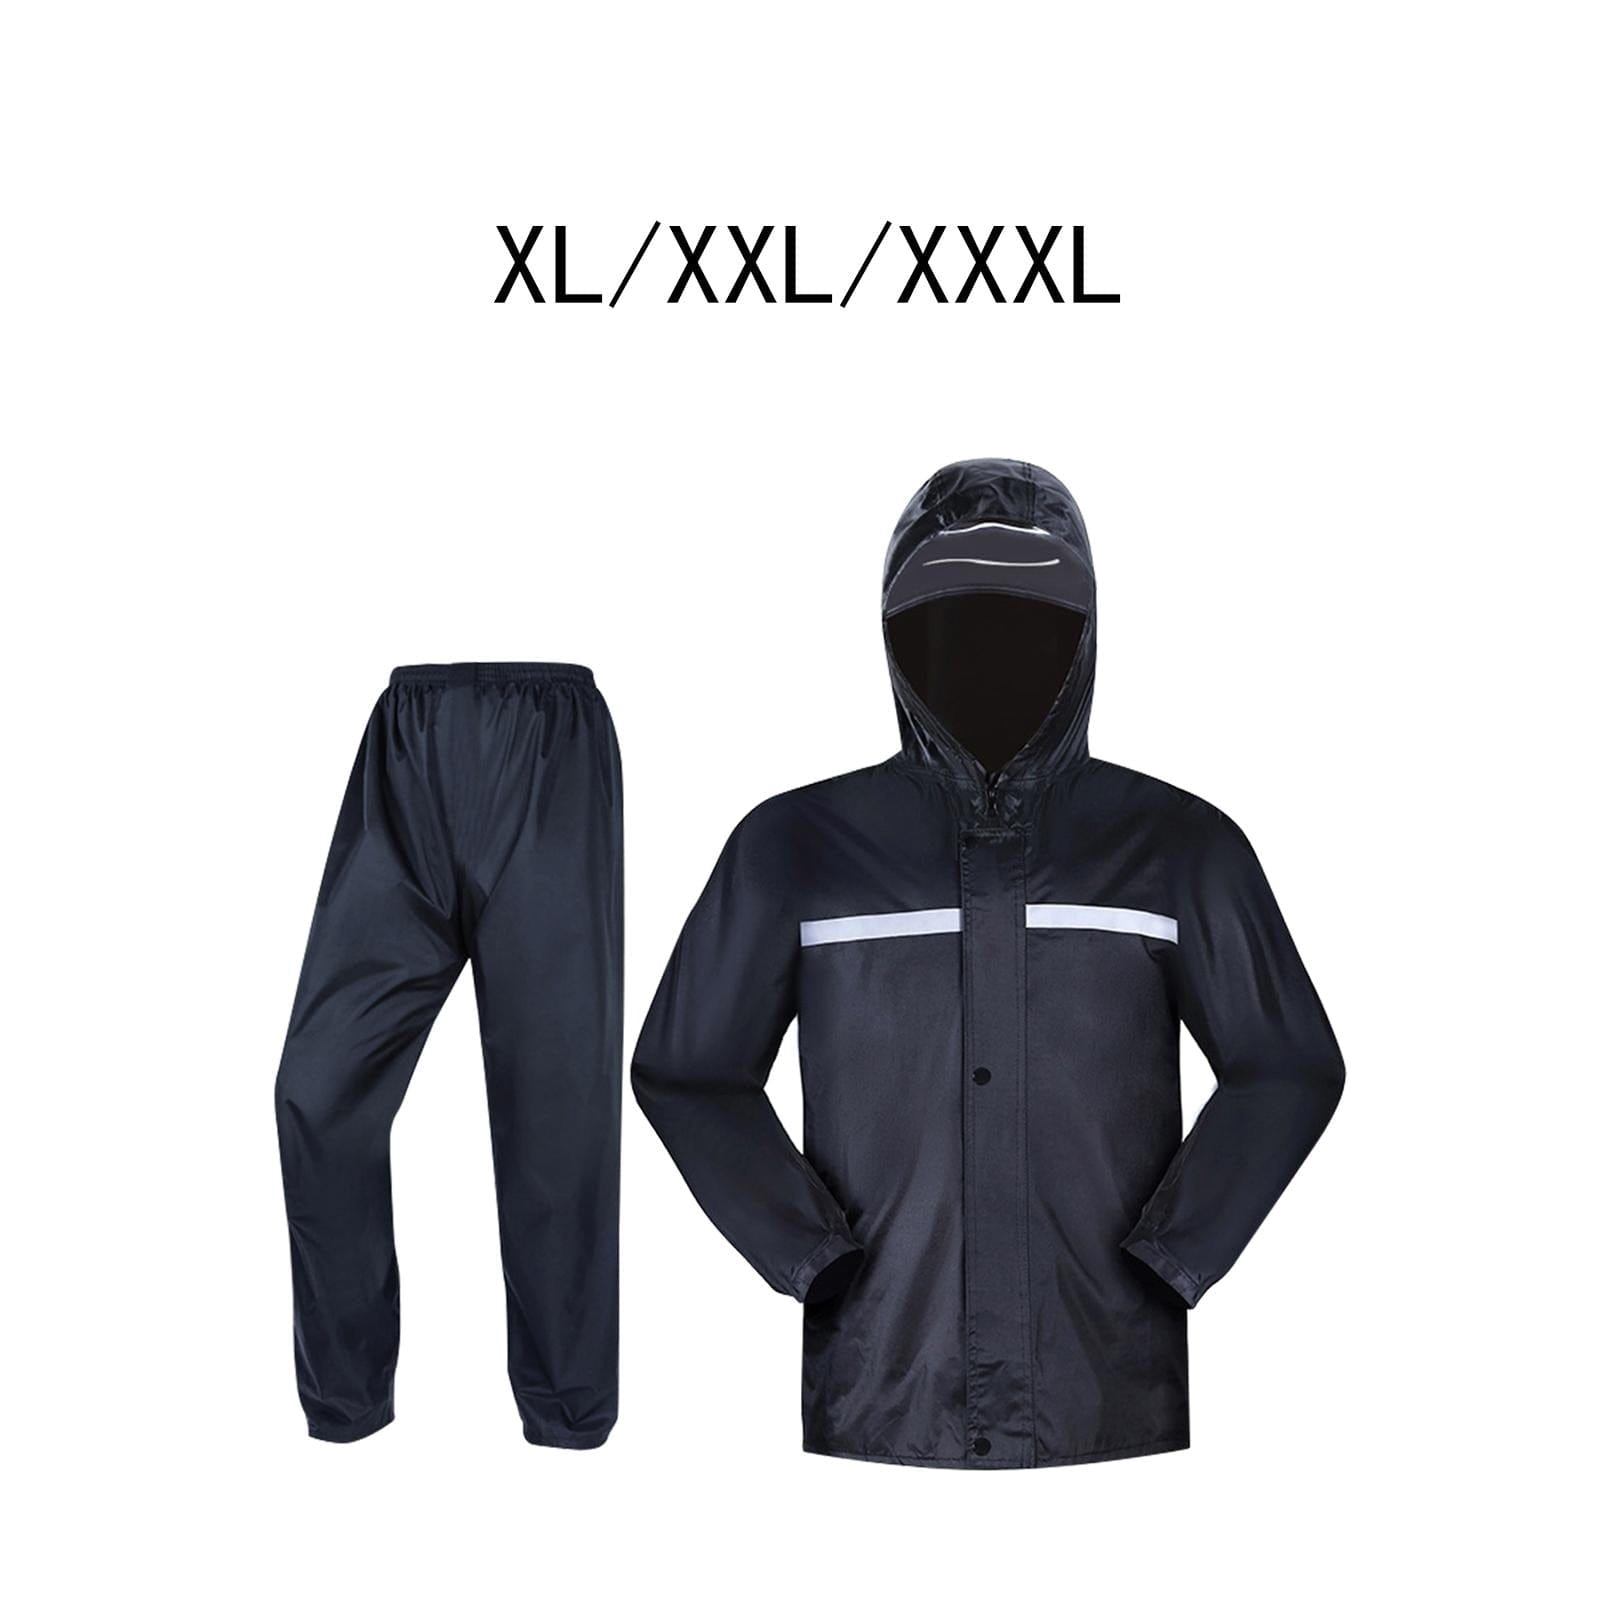 MIERSPORT Rain Suit Waterproof Jacket Breathable Rain Coat Pants Adults Women Men, XL